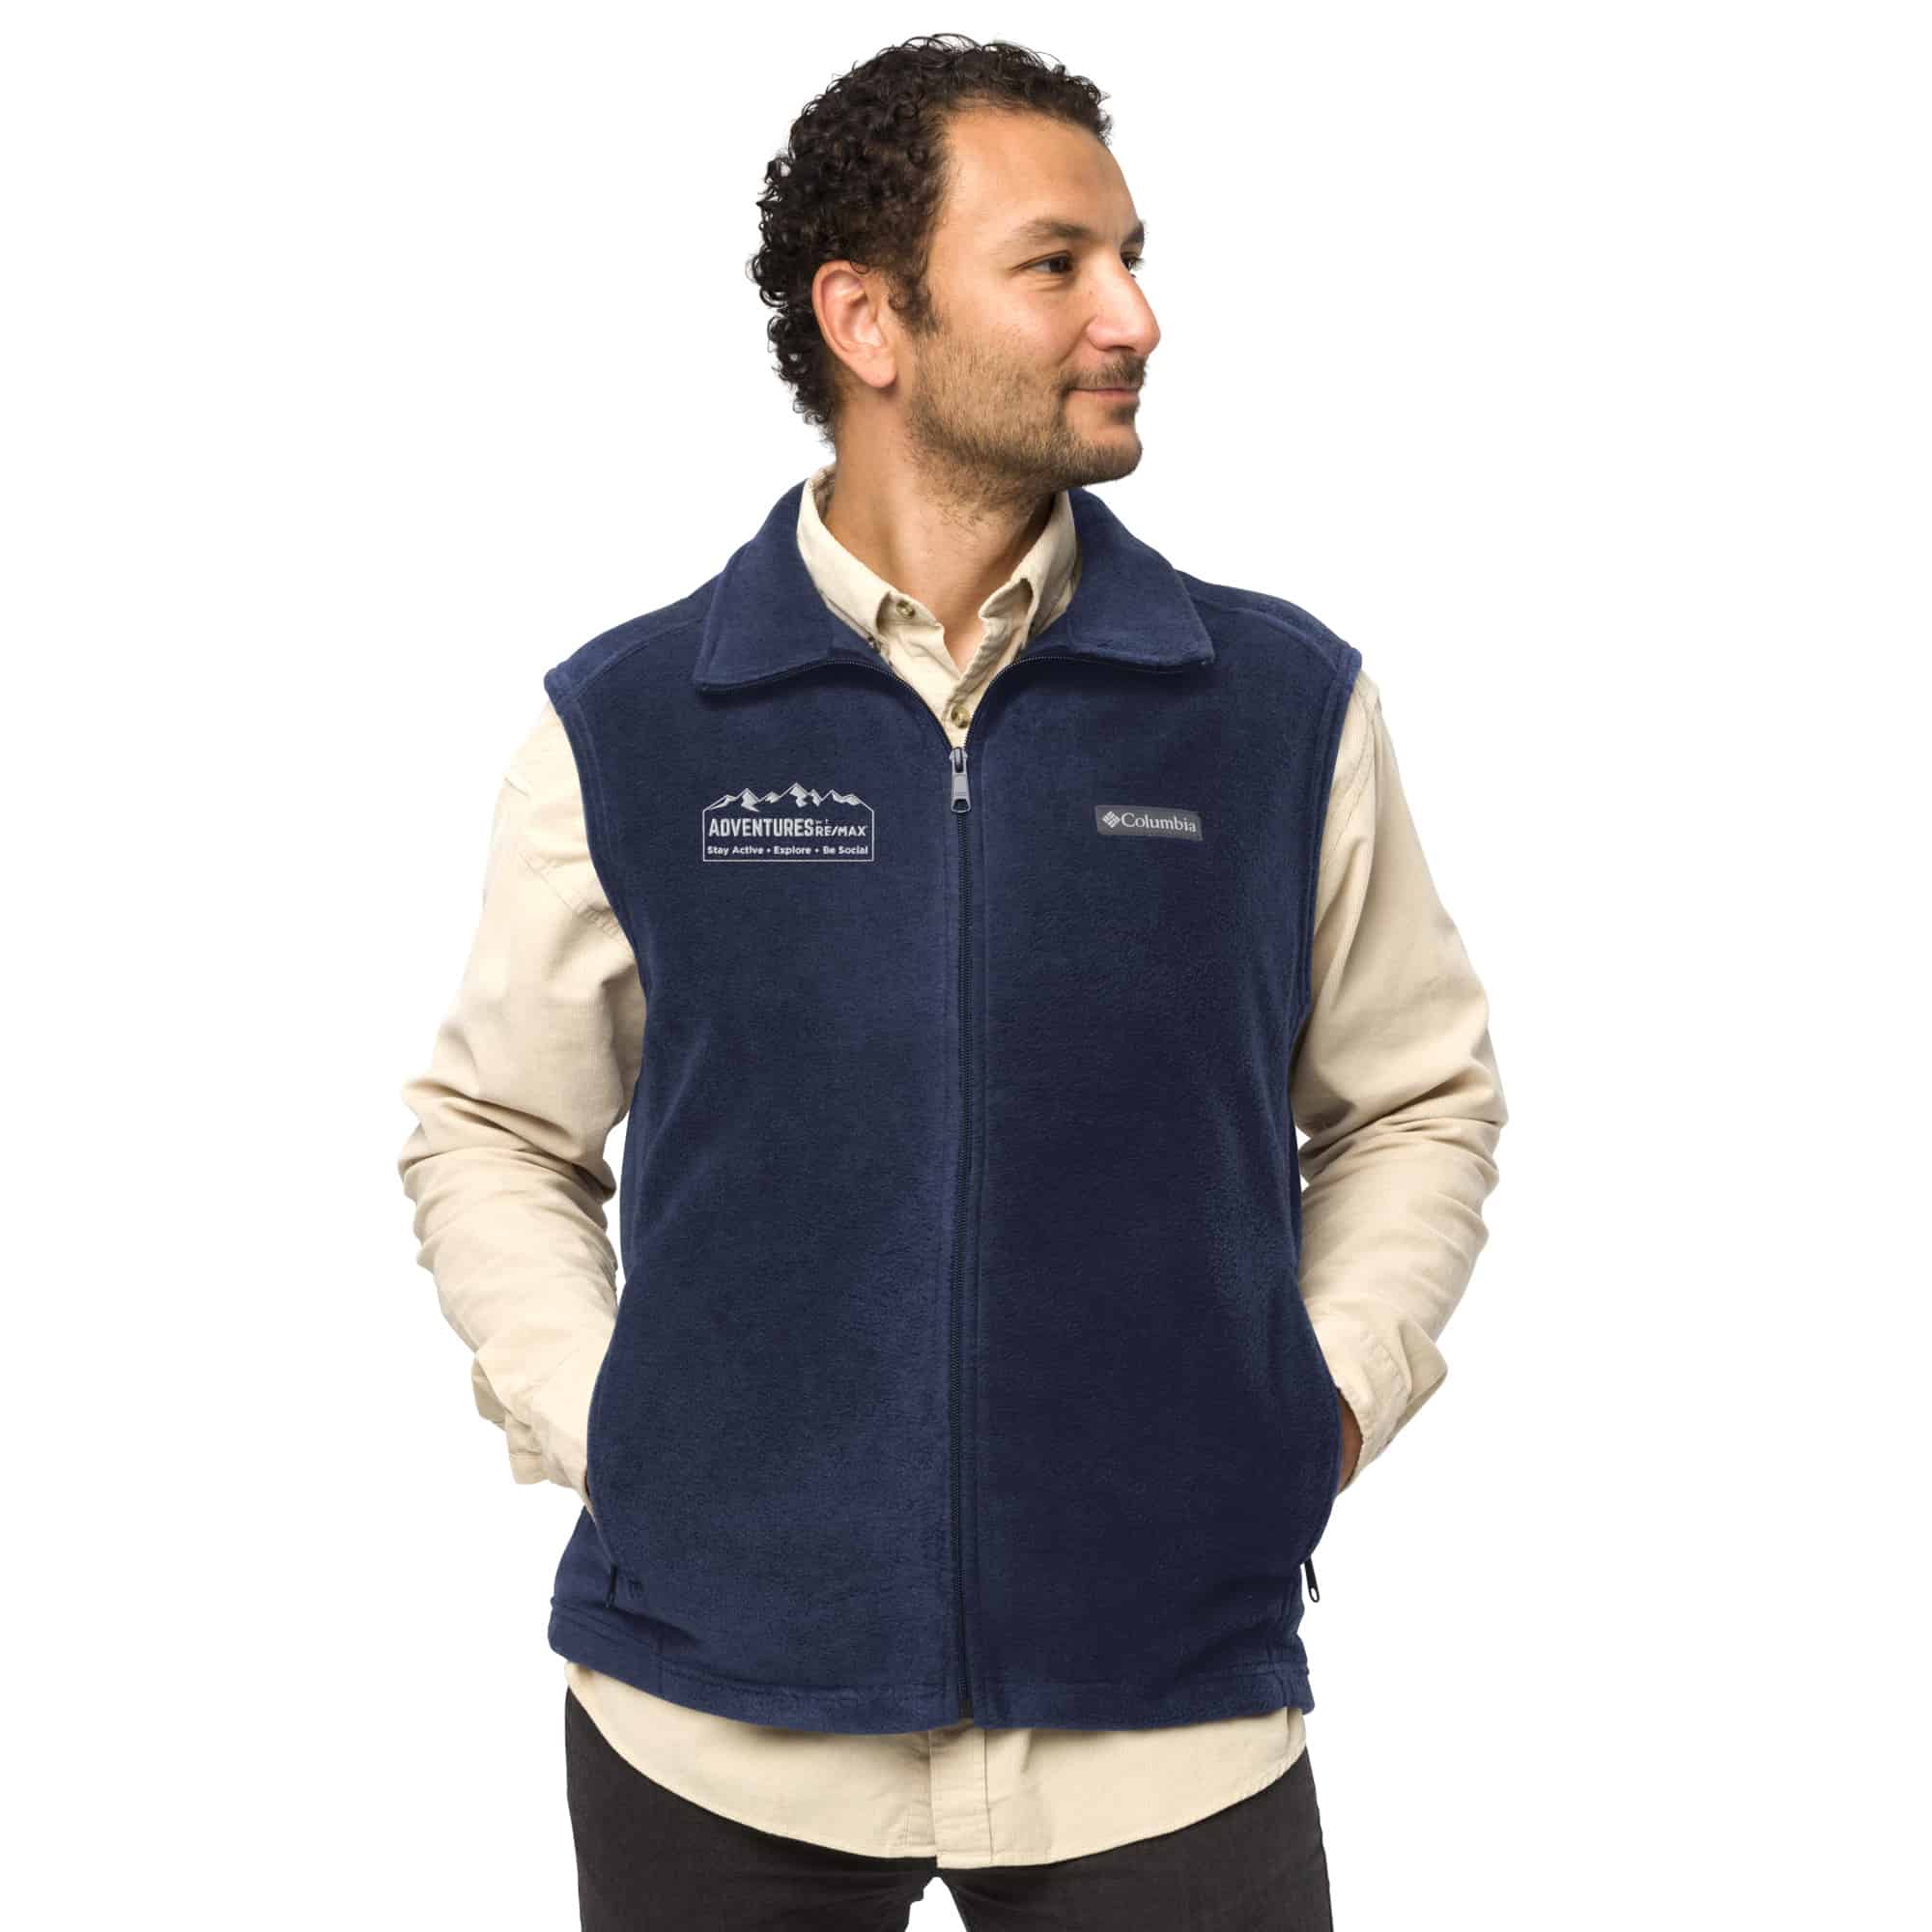 Eddie Bauer® Fleece Vest - Men's** (Restrictions Apply - see